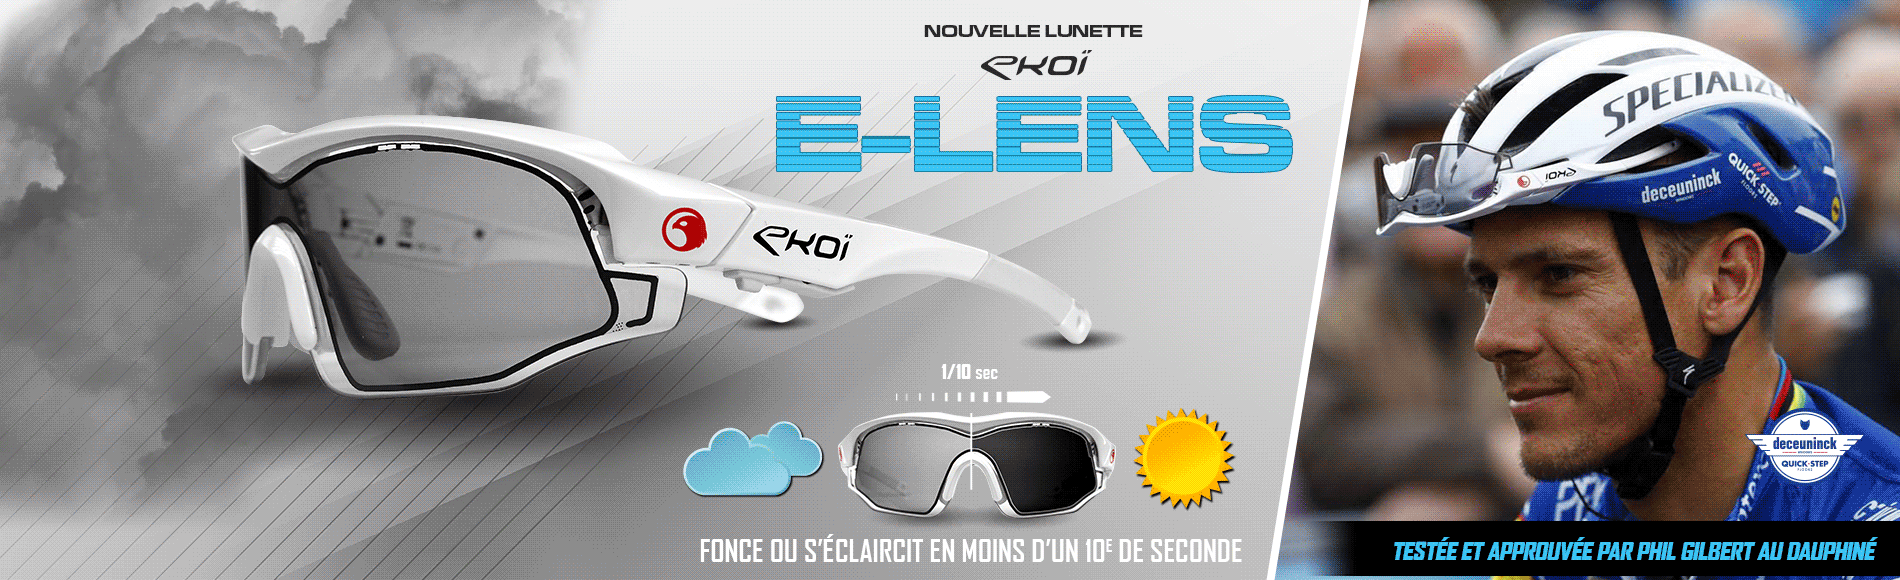 Nya E-LENS EKOI-glasögon och dess fotokroma elektroniska lins